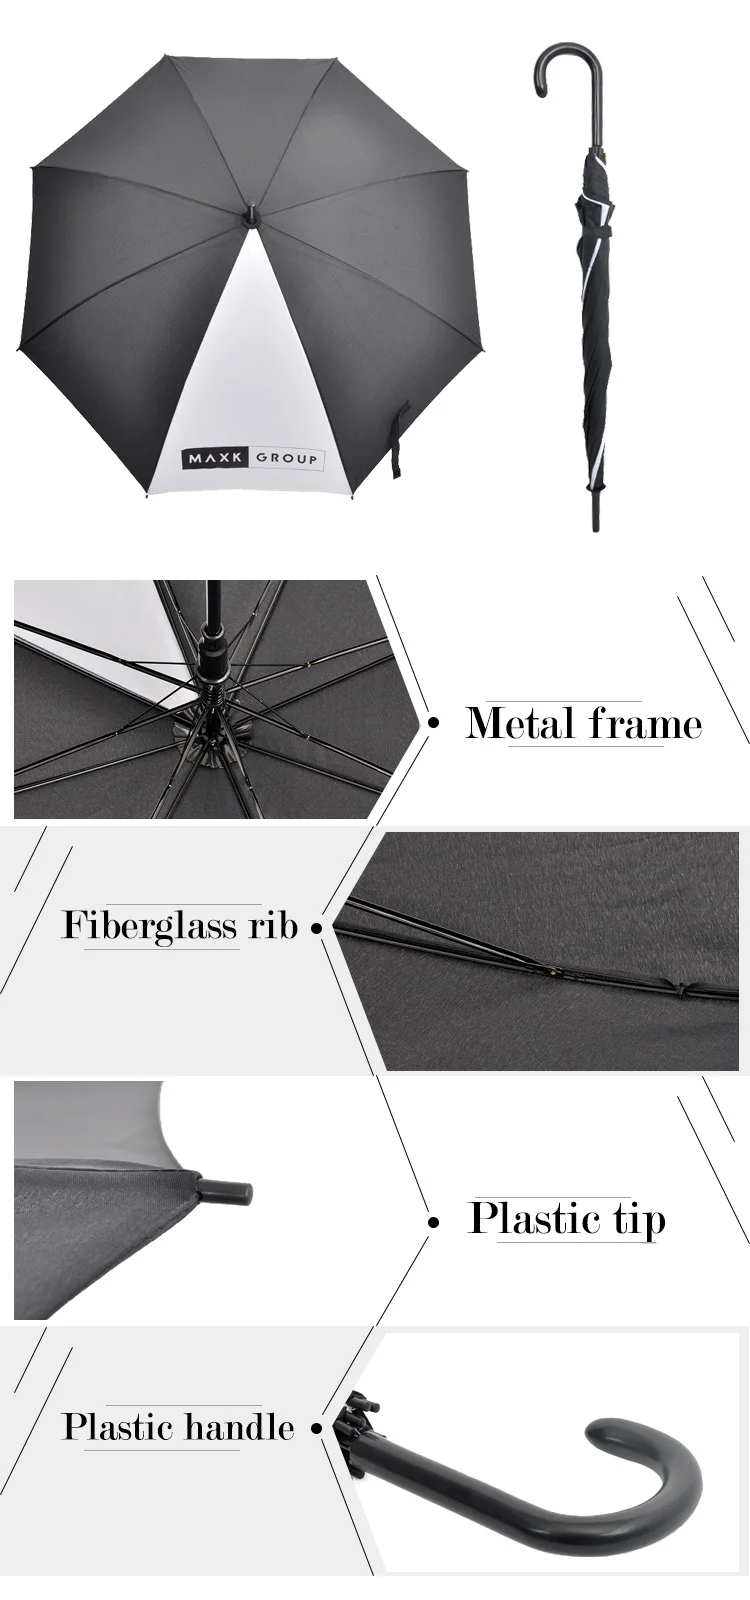 S23-03custom printed promotion umbrellas with logo prints